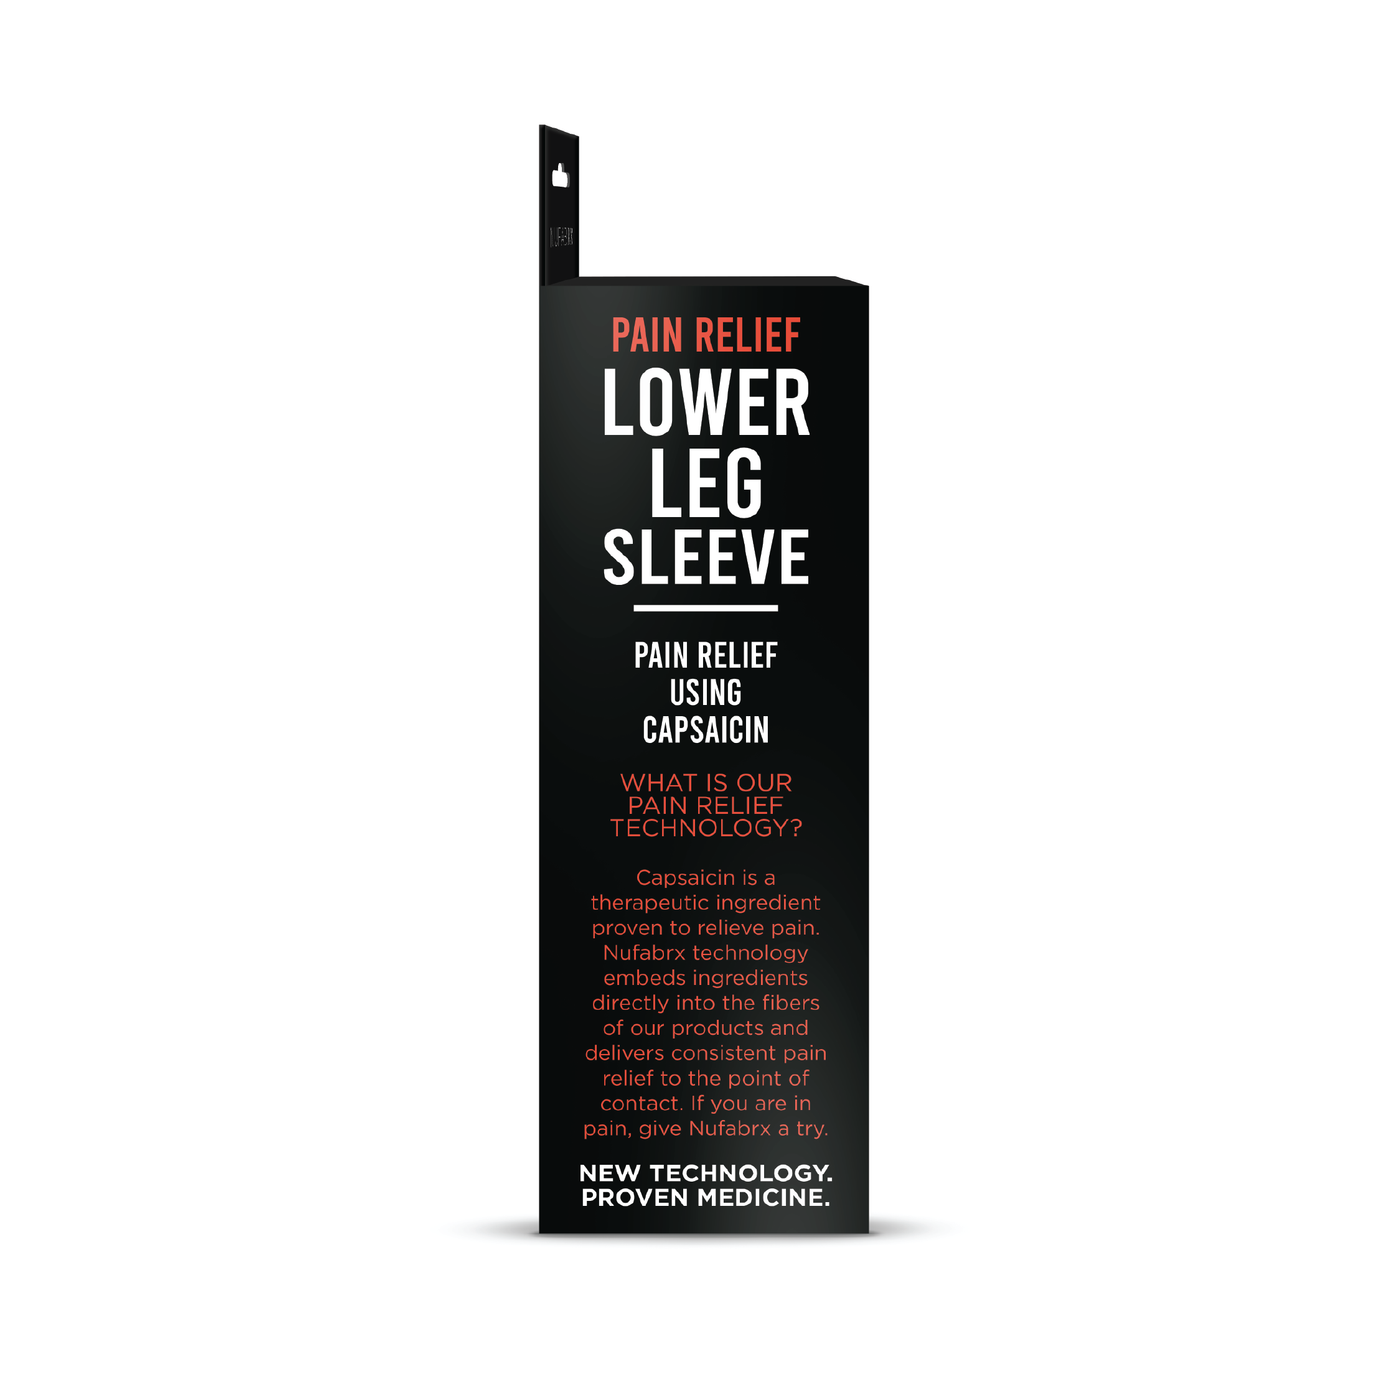 Leg Compression Sleeve